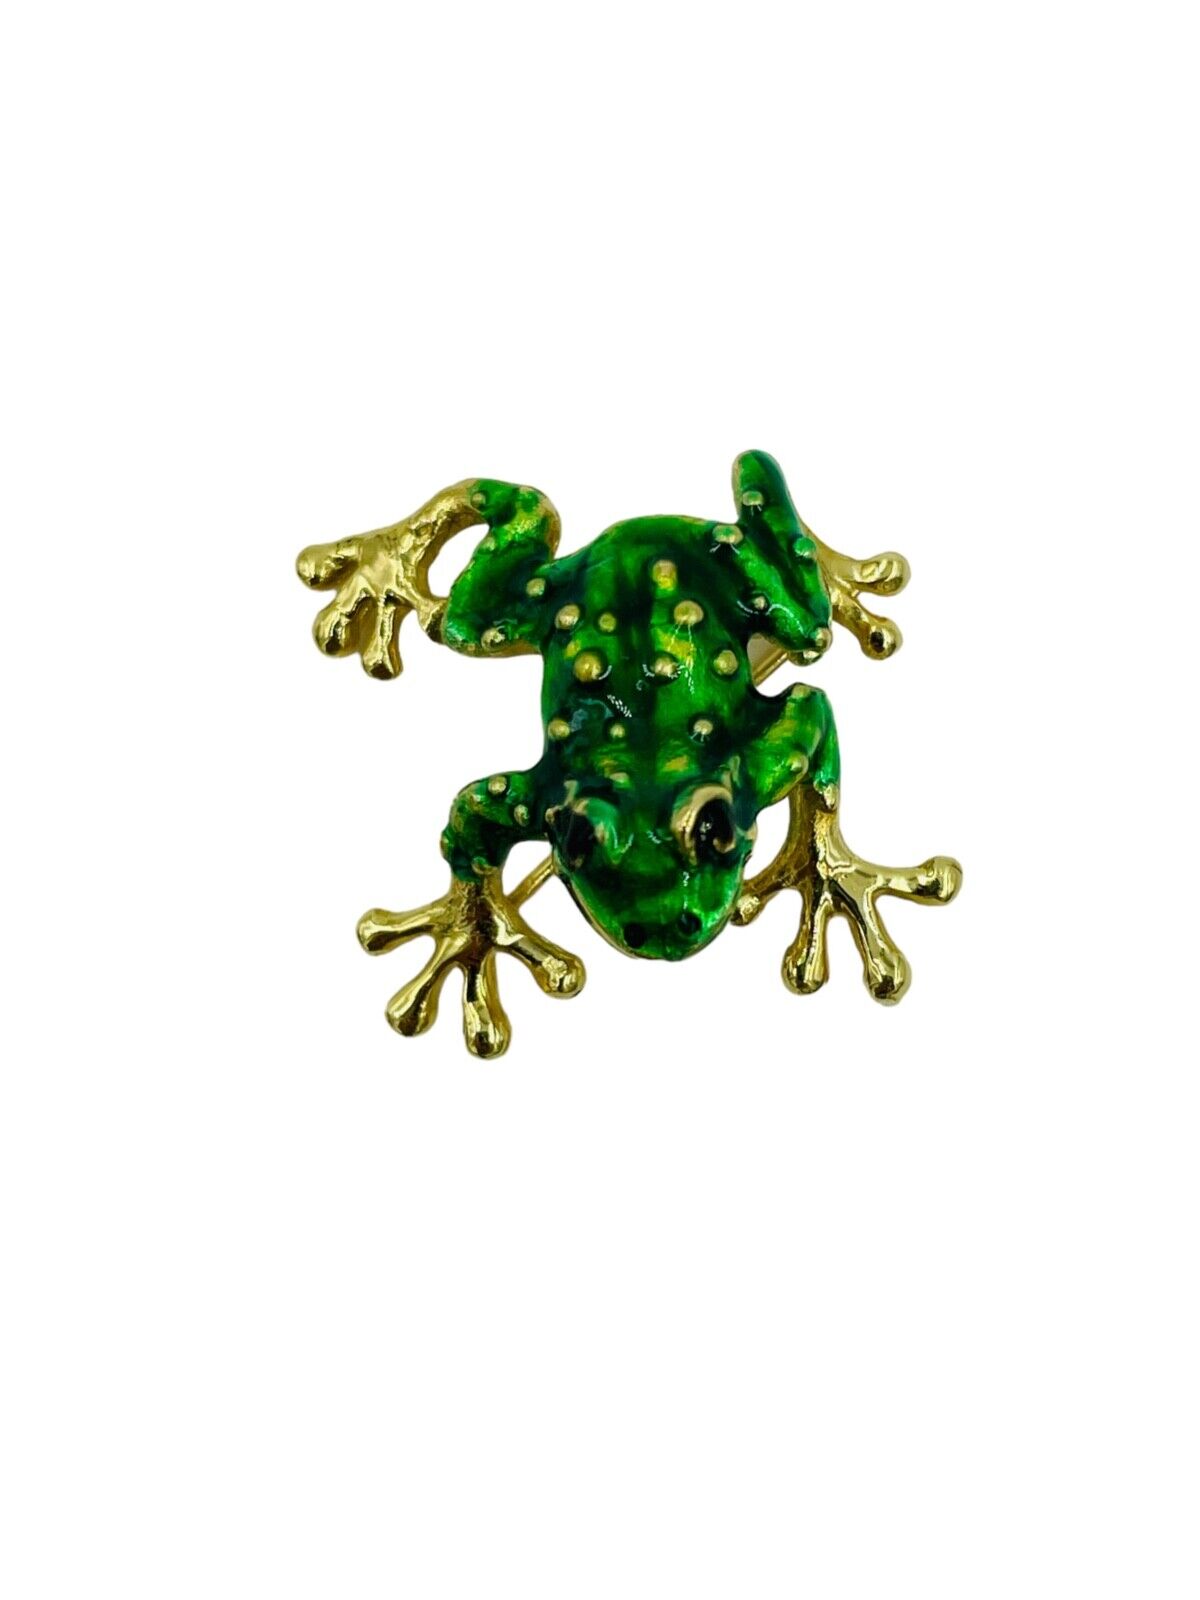 Vintage Green Frog Brooch Pin  Pendant  14K Yellow Gold Enamel